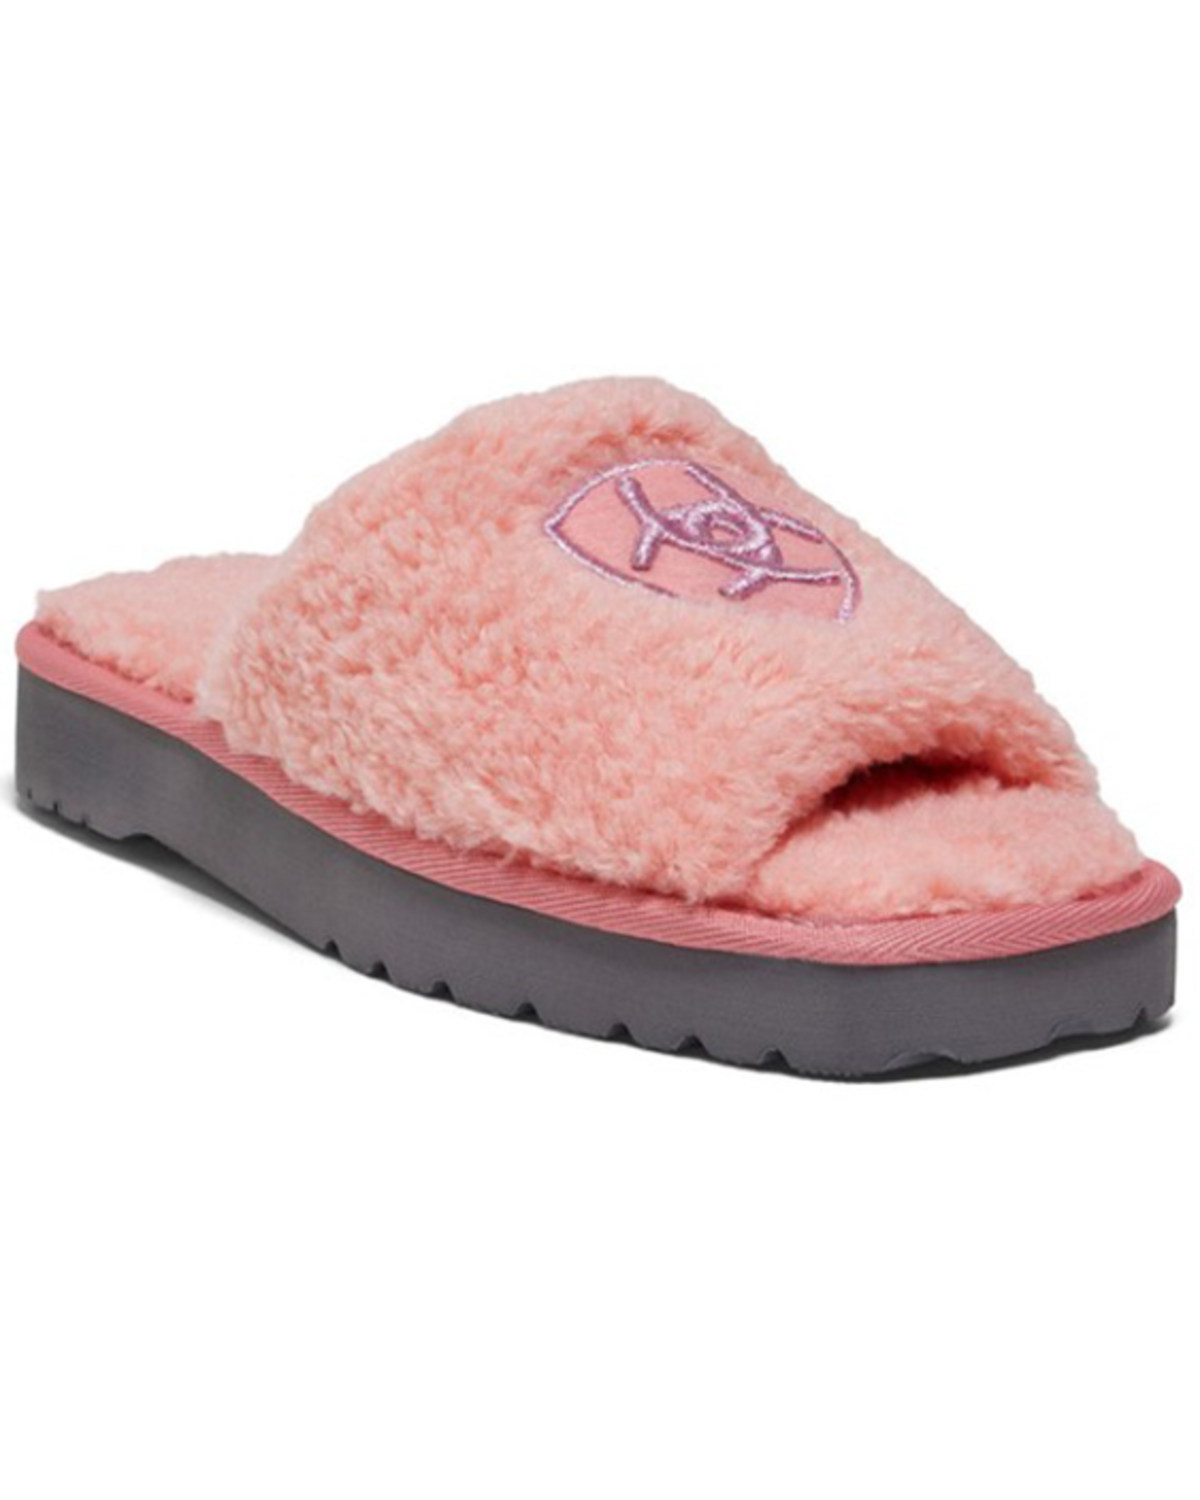 Ariat Women's Cozy Slide Slippers - Square Toe